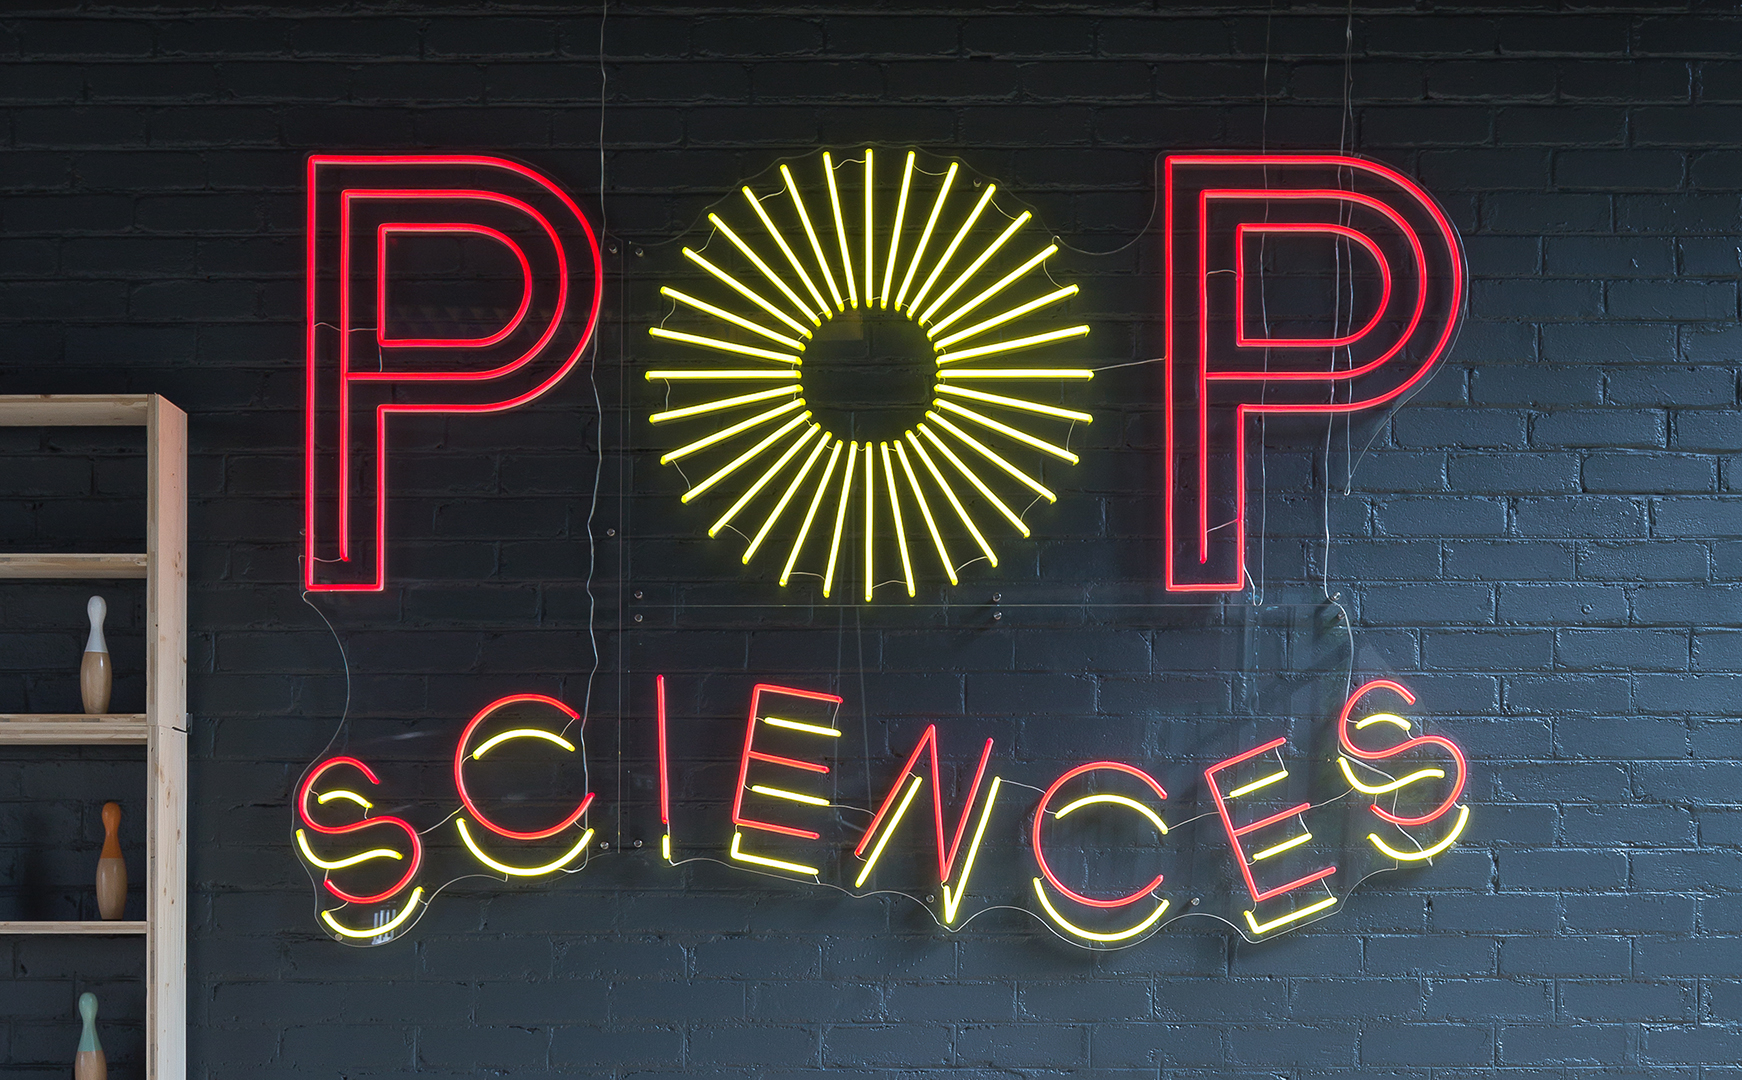 Pop sciences